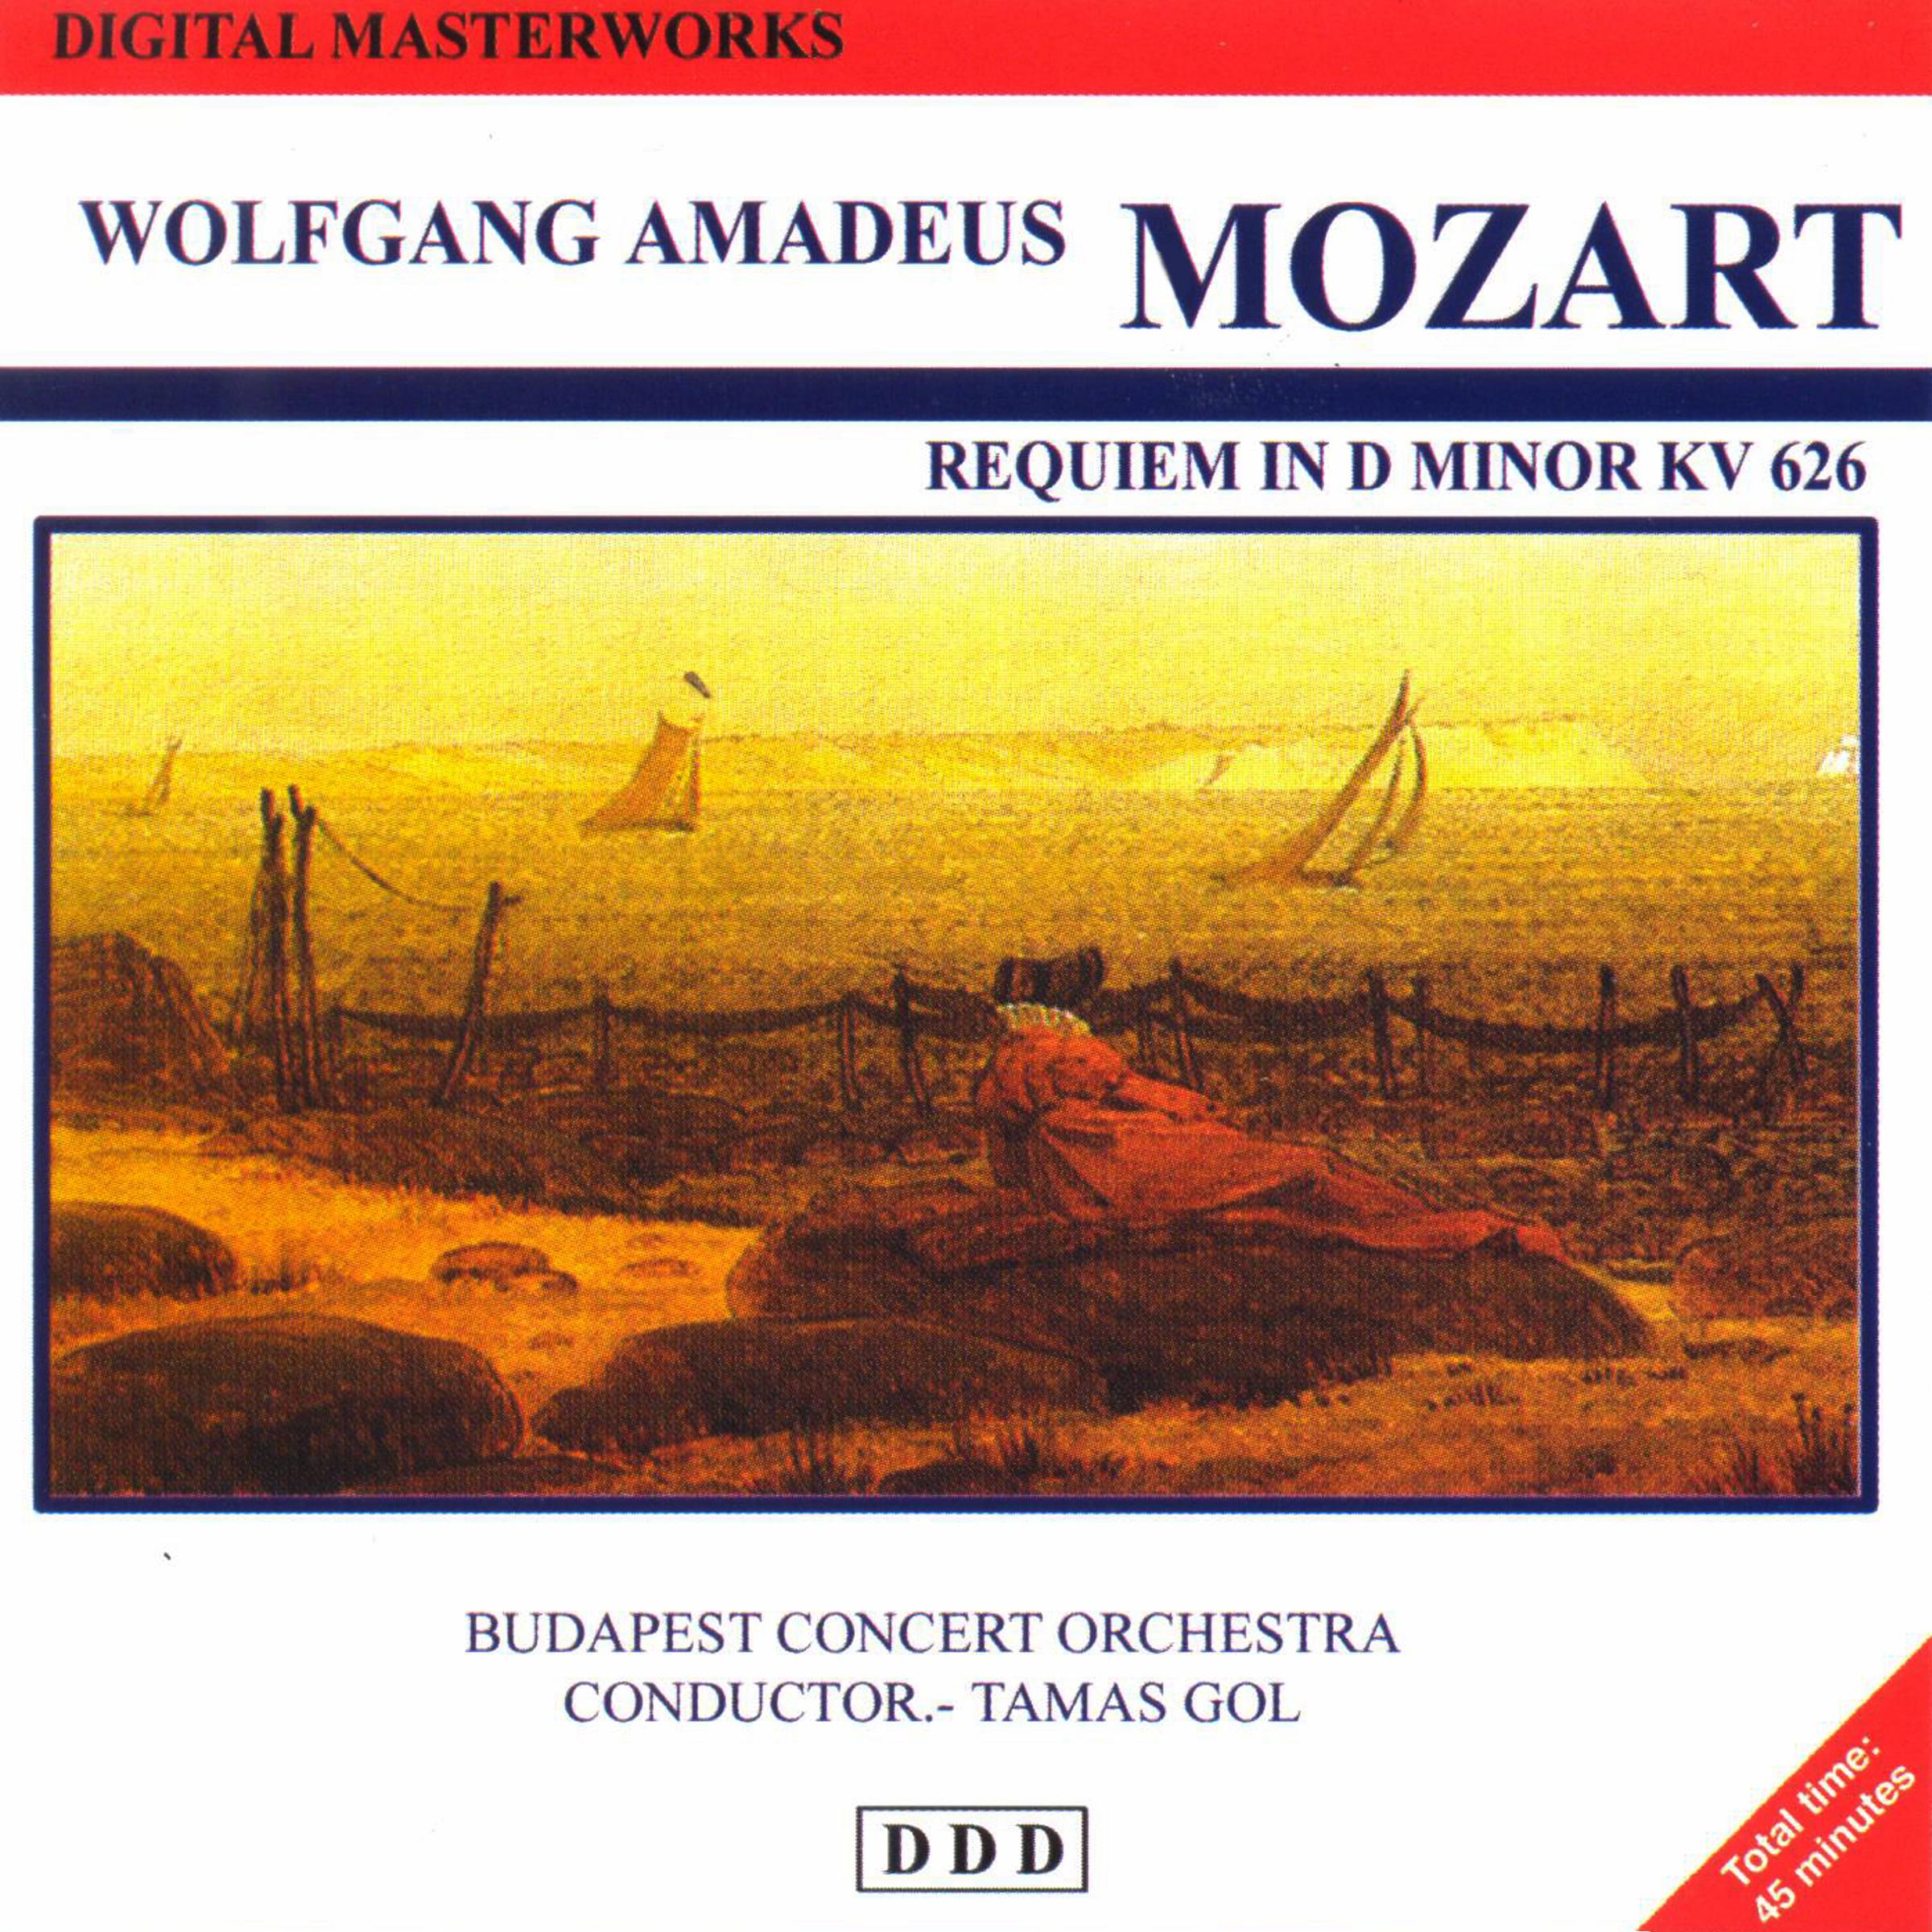 Wolfgang Amadeus Mozart: Digital Masterworks. Requiem in D Minor